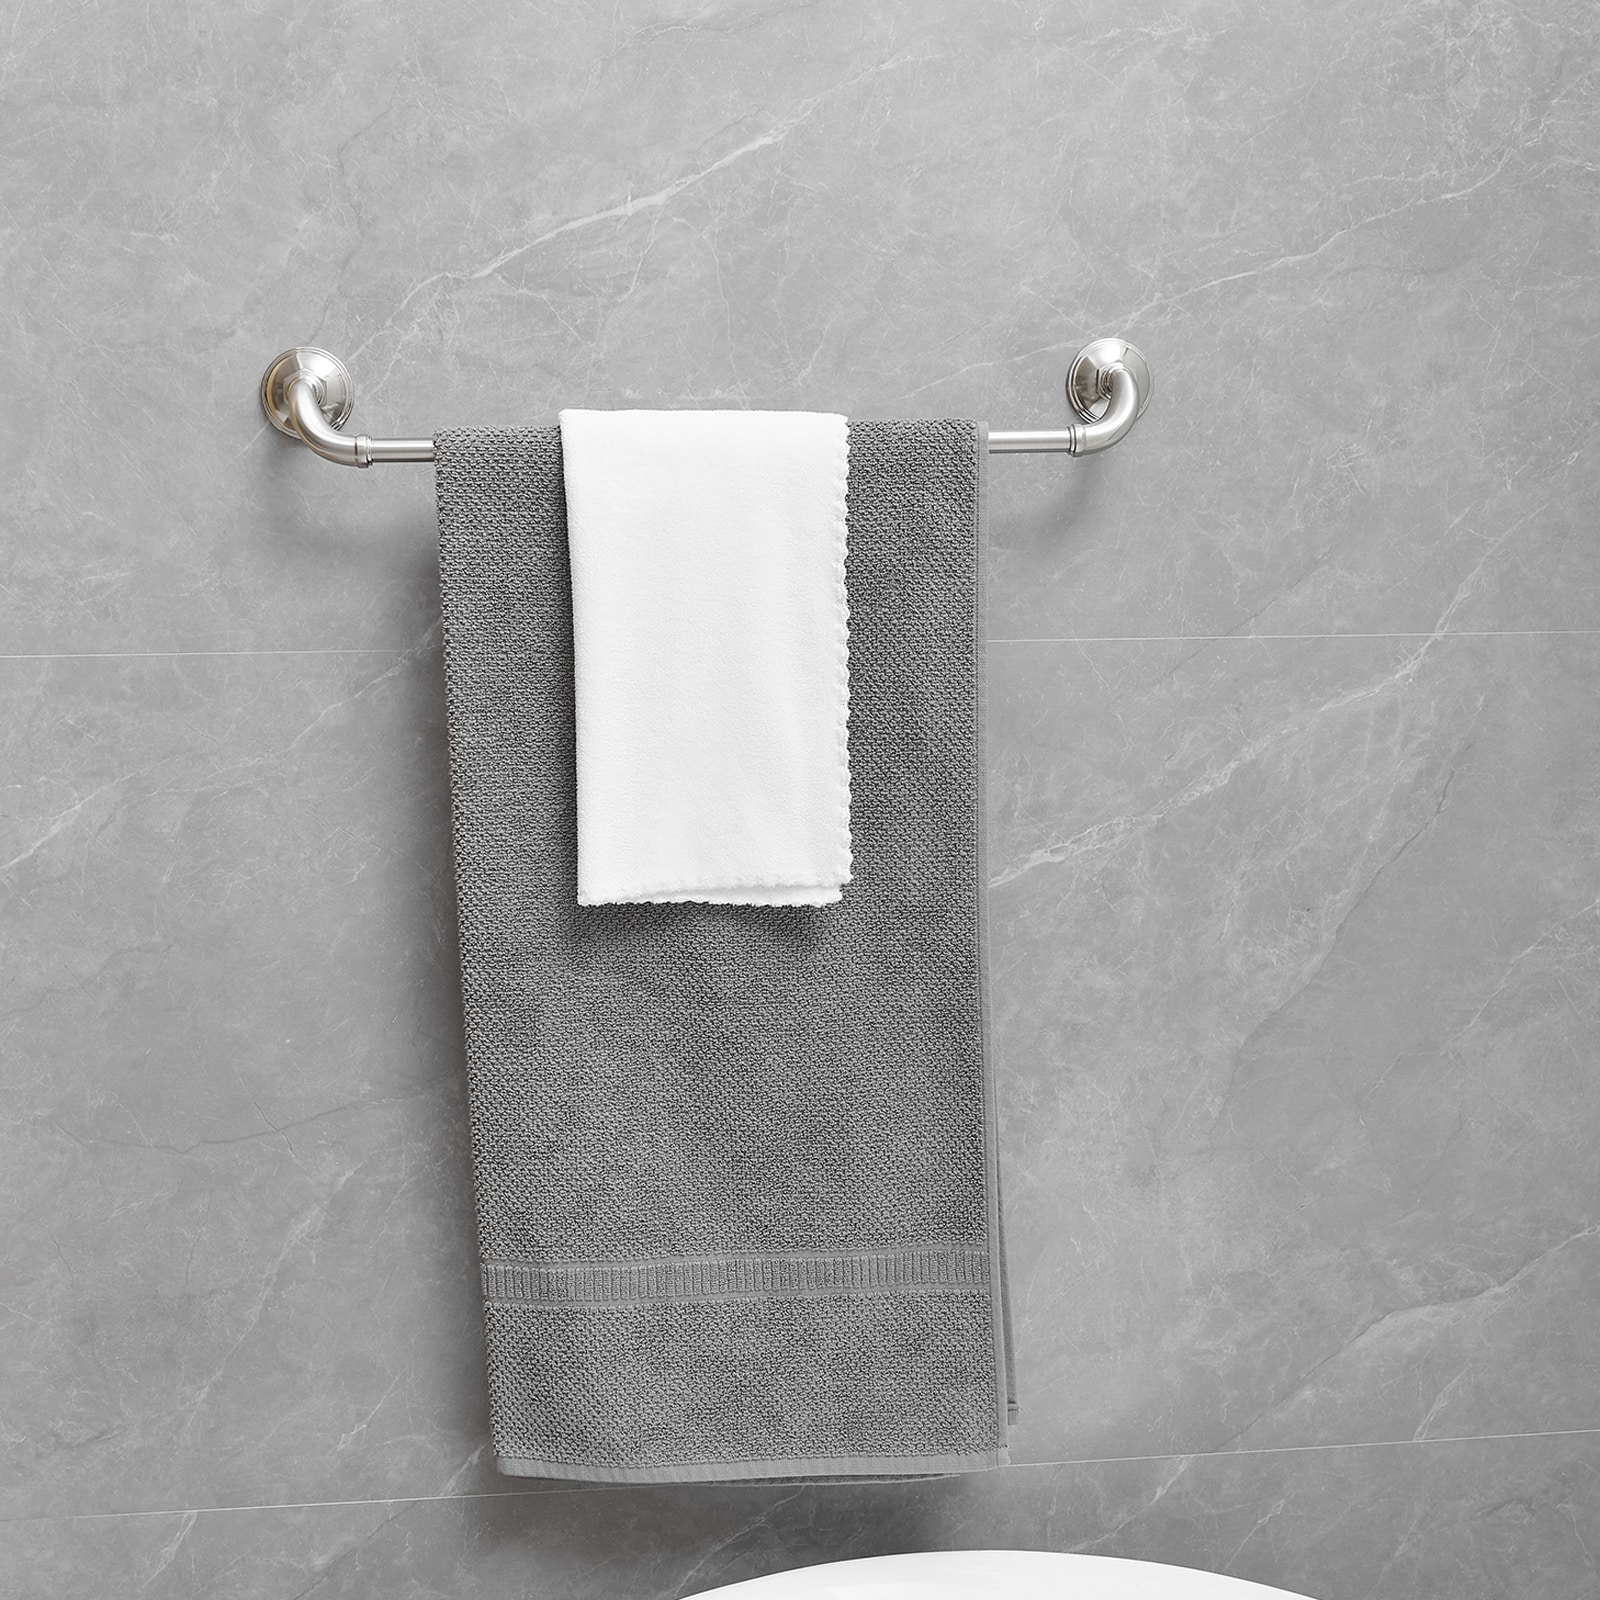 BWE 4-Piece Bath Hardware Set Towel Bar Hand Towel Holder Toilet Paper Holder Towel Hook Farmhouse